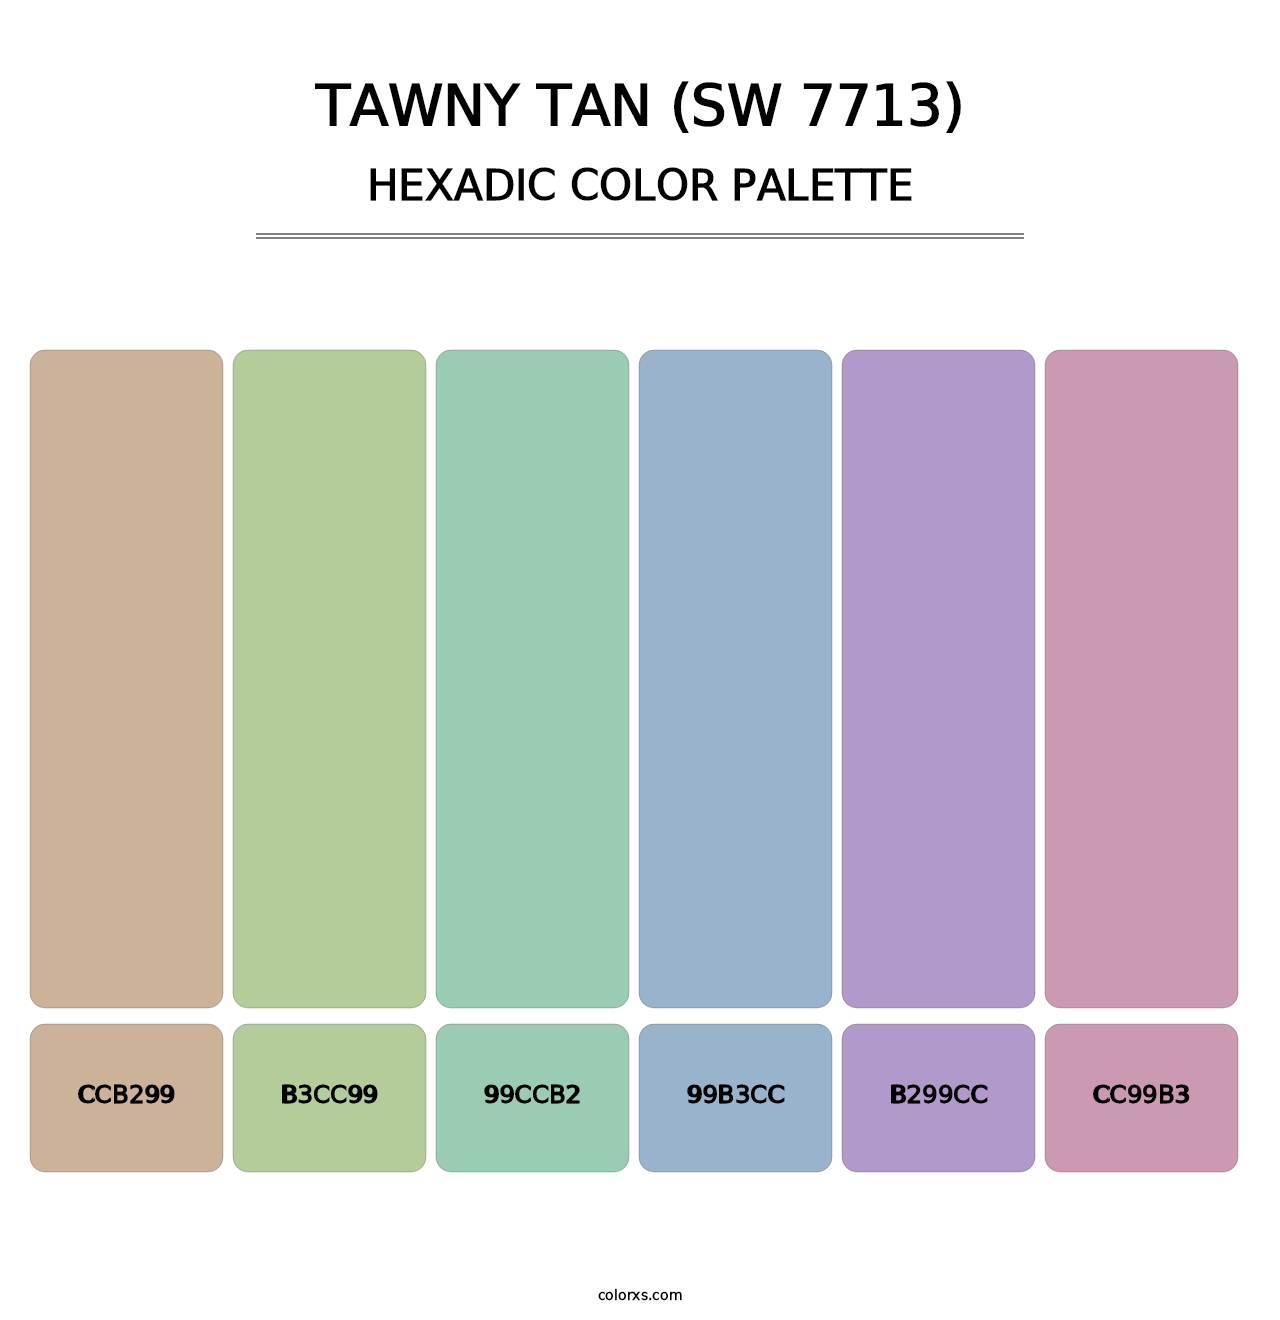 Tawny Tan (SW 7713) - Hexadic Color Palette